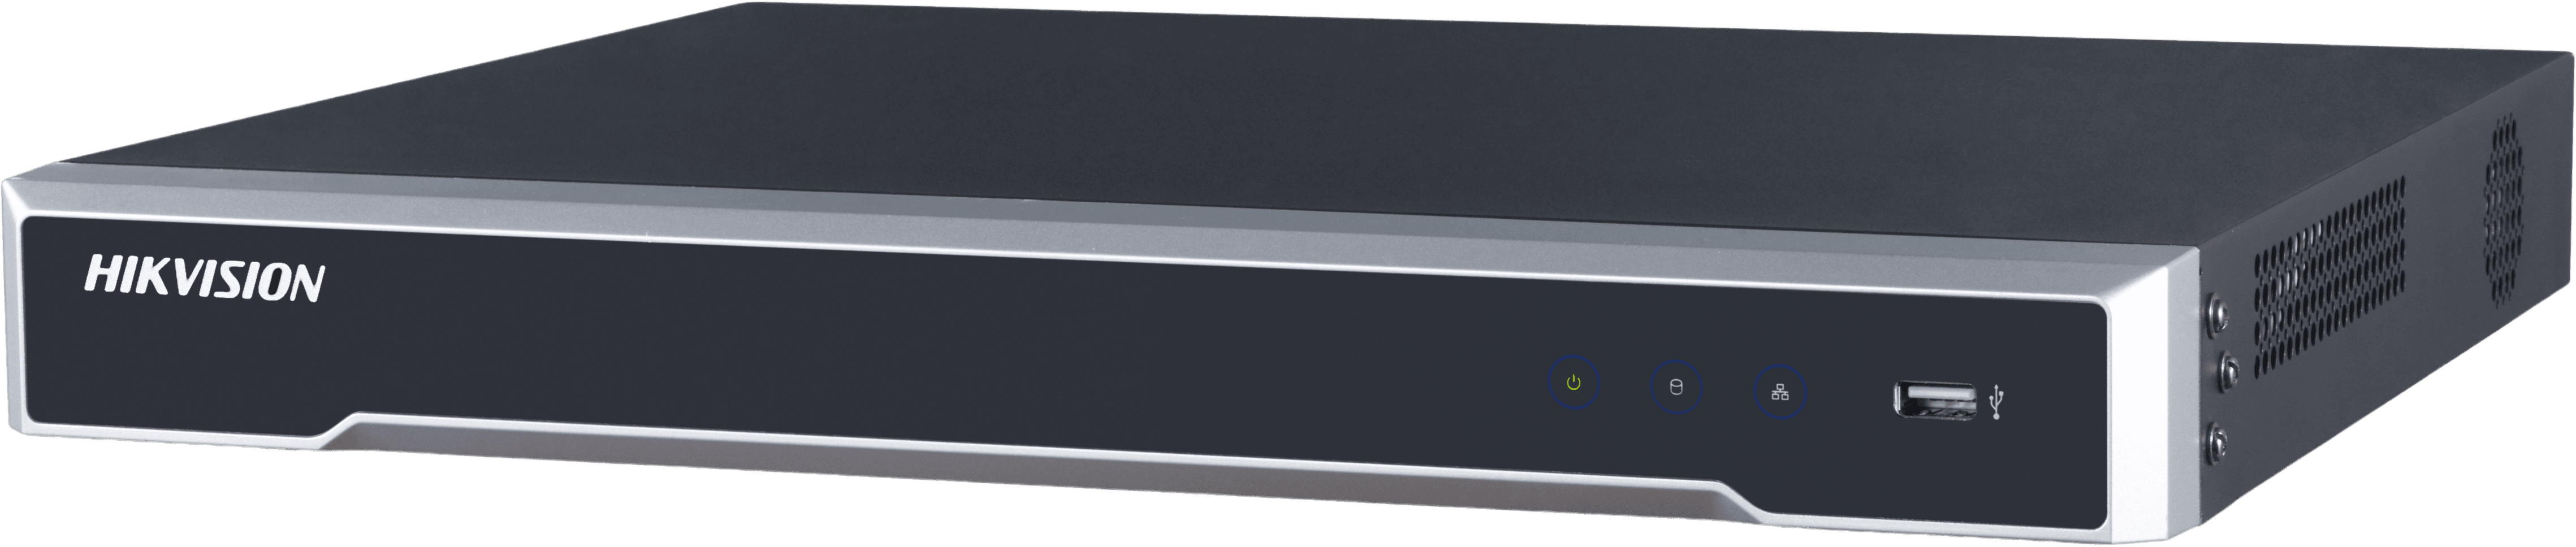 1001036 Hikvision Netwerk Video Recorder Plug&Play 8-kanalen, inclusief PoE switch